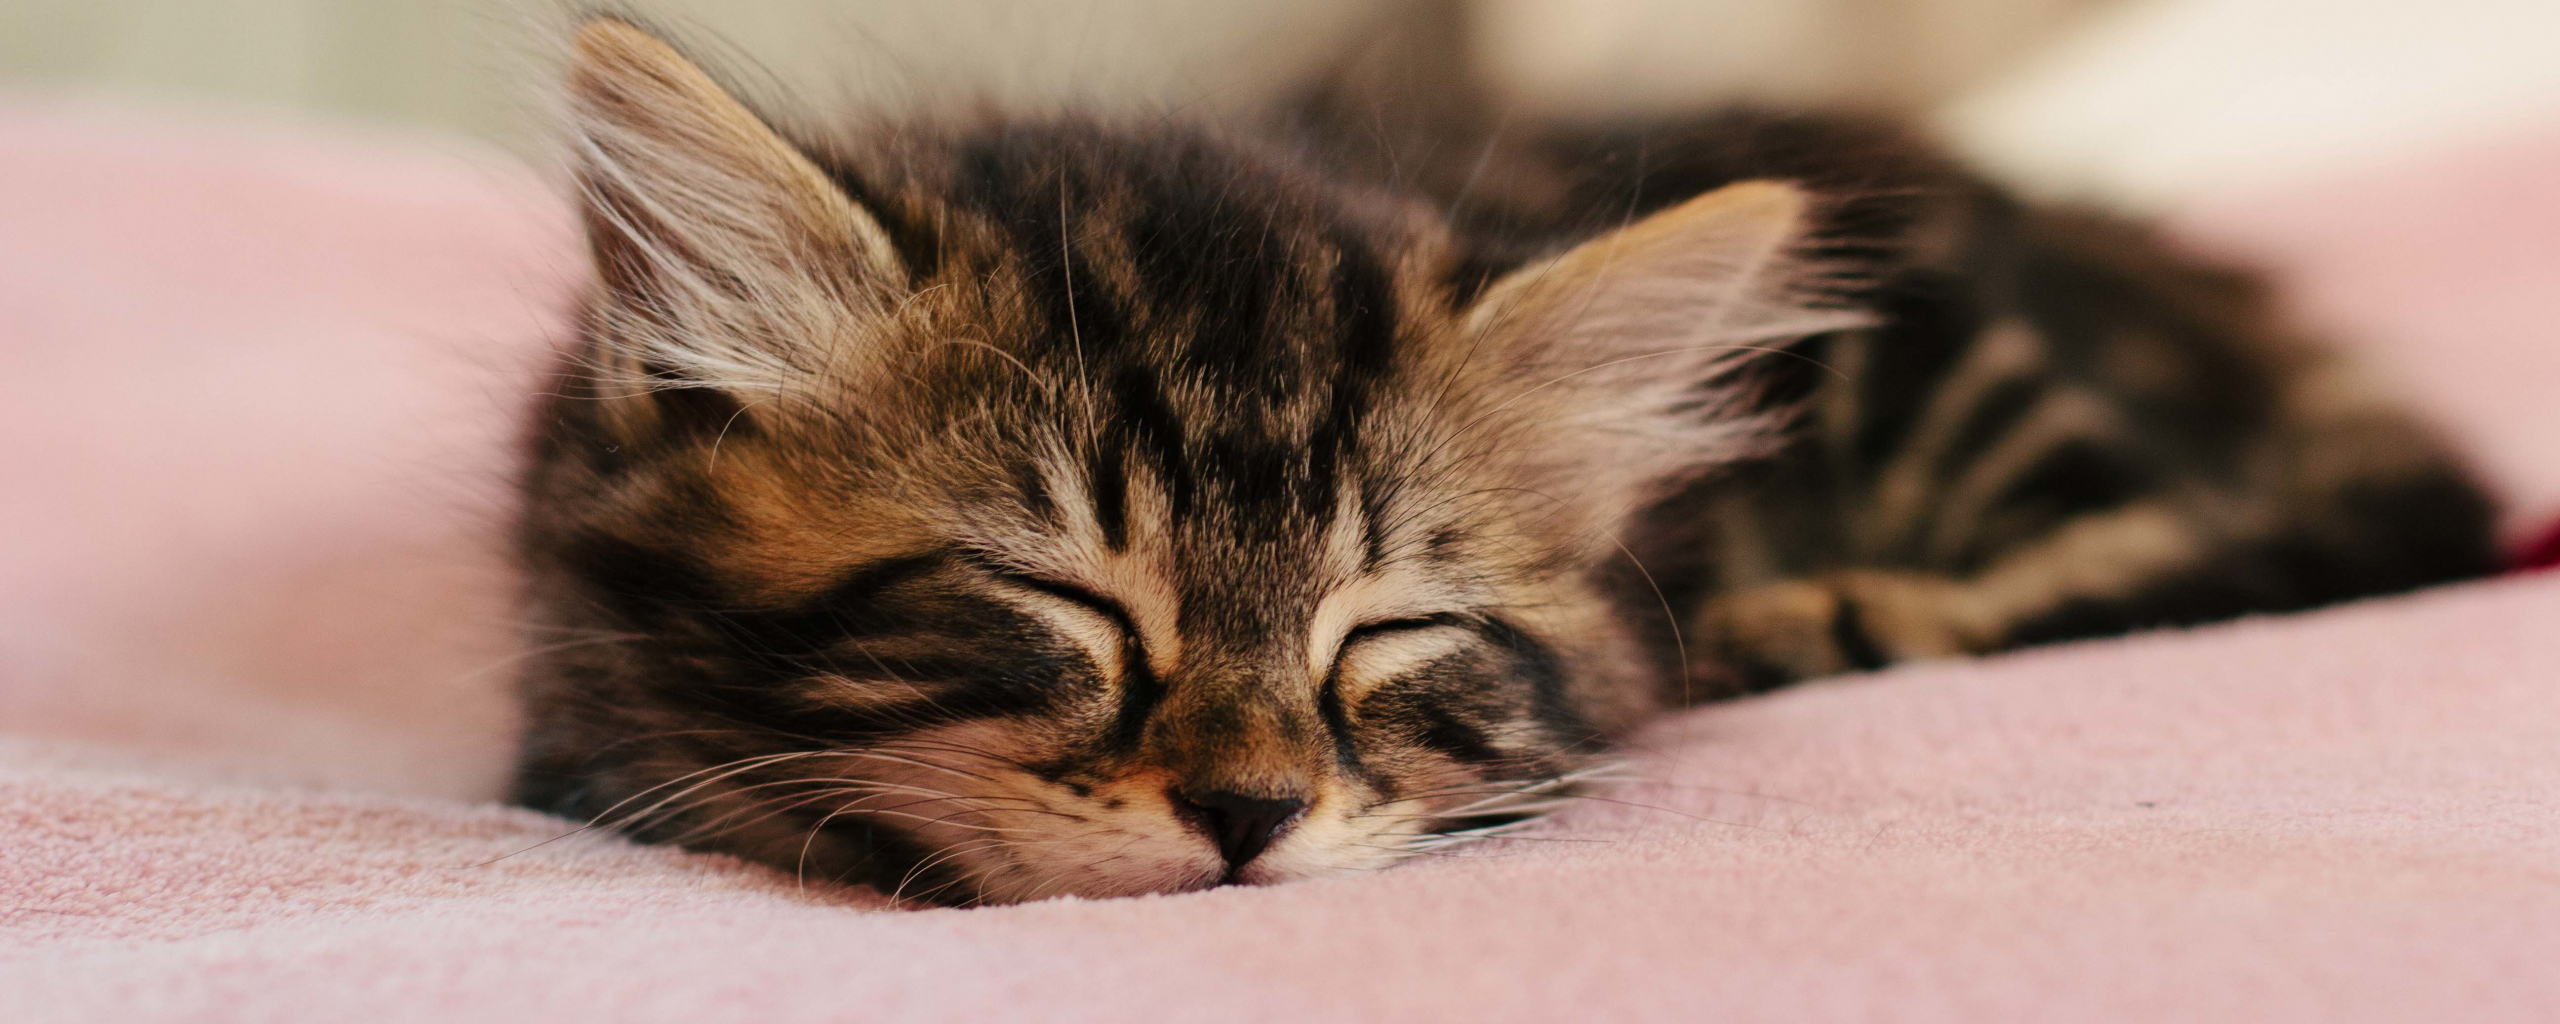 Desktop Wallpaper Cute Sleep Kitten Baby Animal Hd Image Picture Background Lawnvi